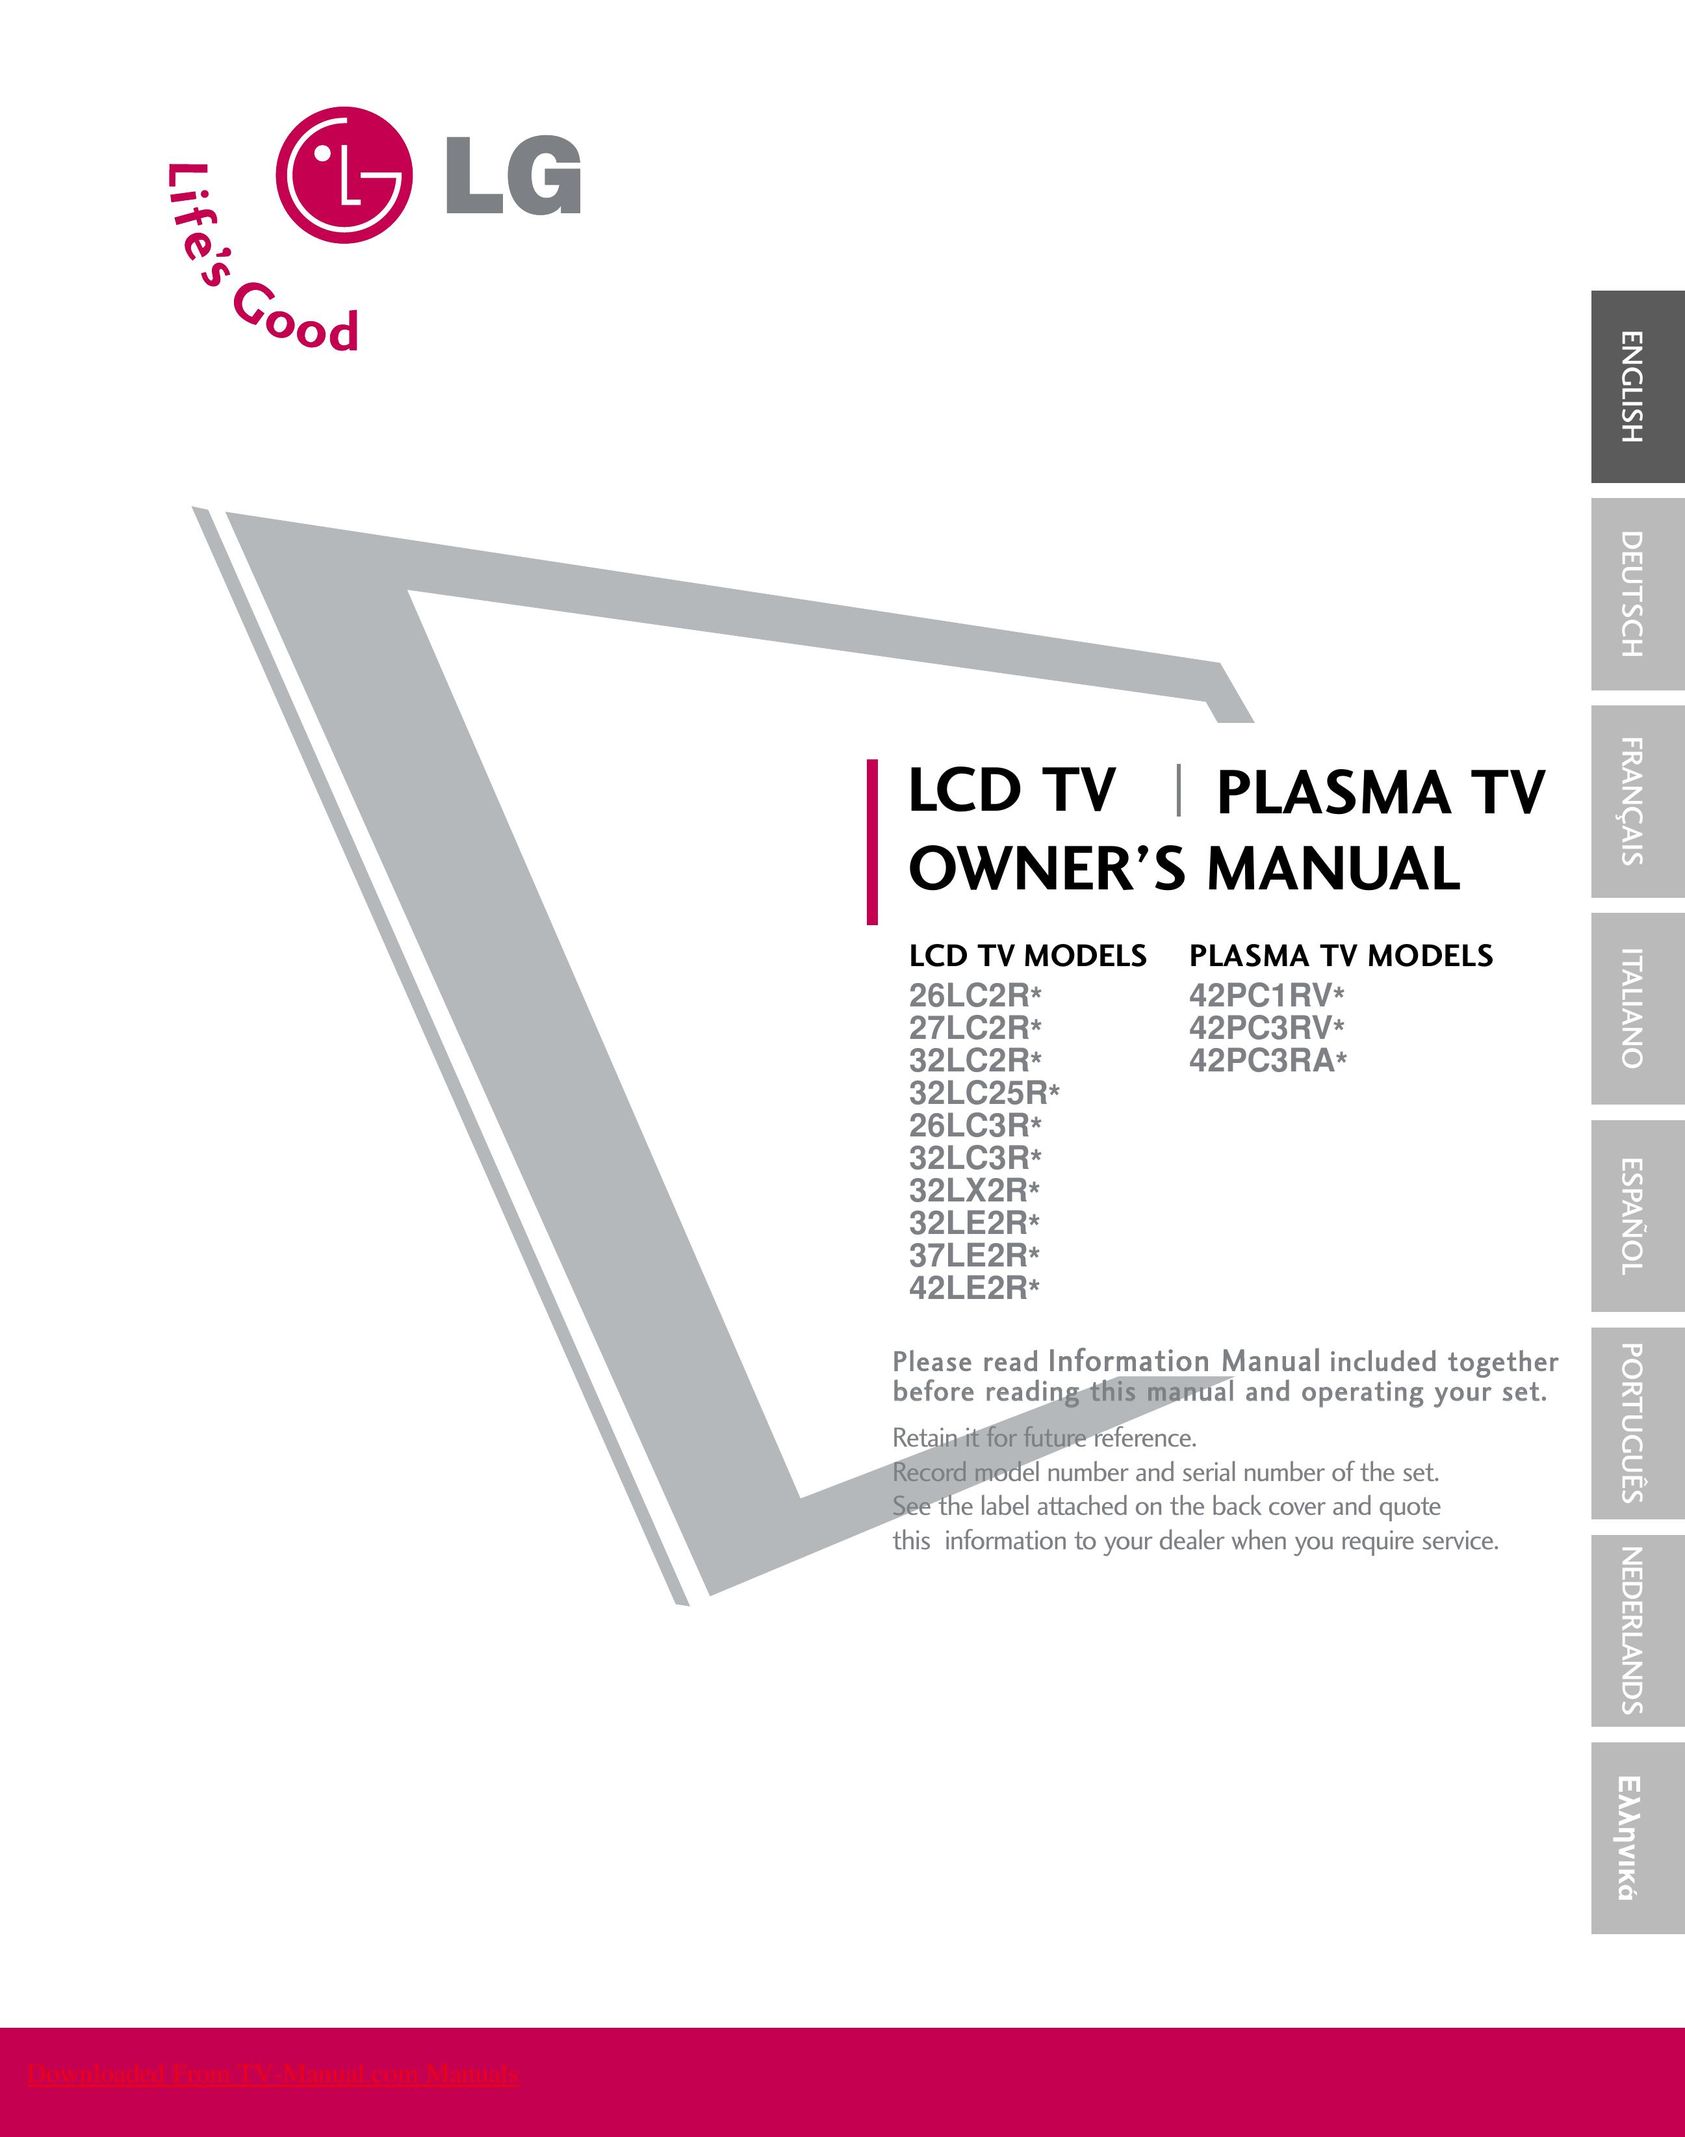 LG Electronics 37LE2R* TV Antenna User Manual